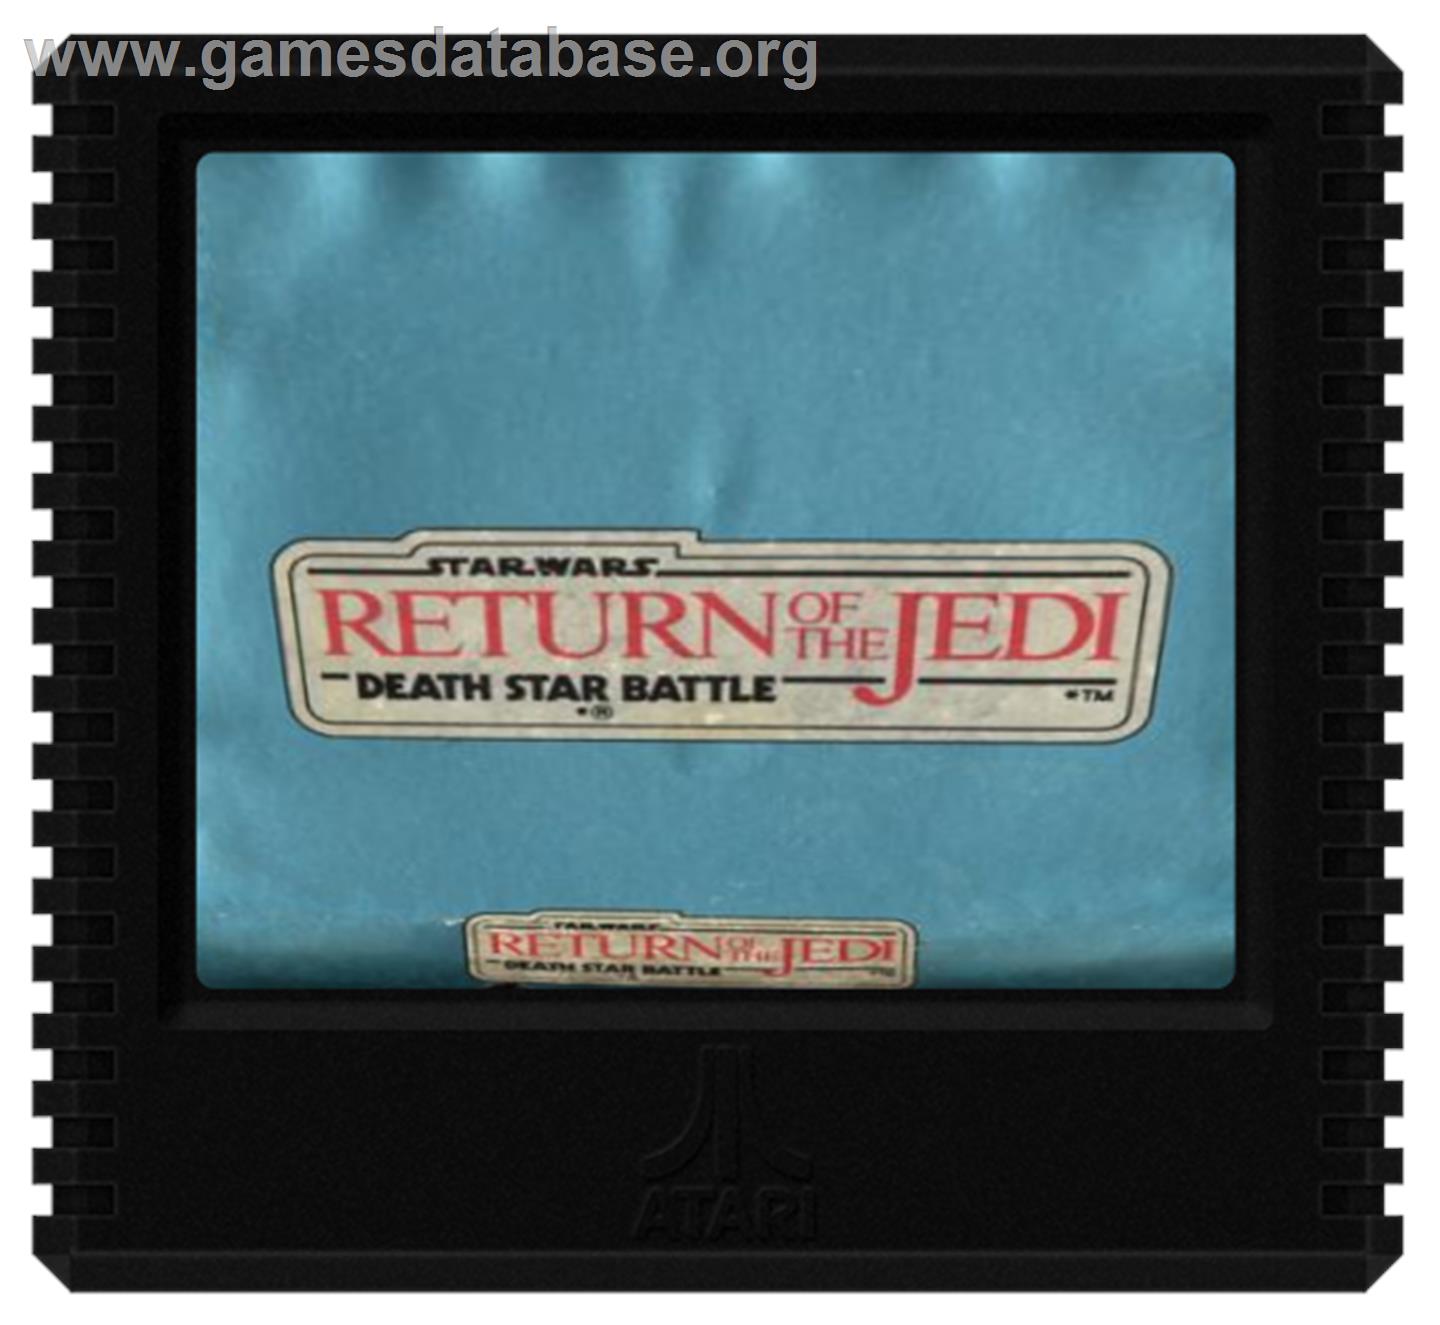 Star Wars: Return of the Jedi - Death Star Battle - Atari 5200 - Artwork - Cartridge